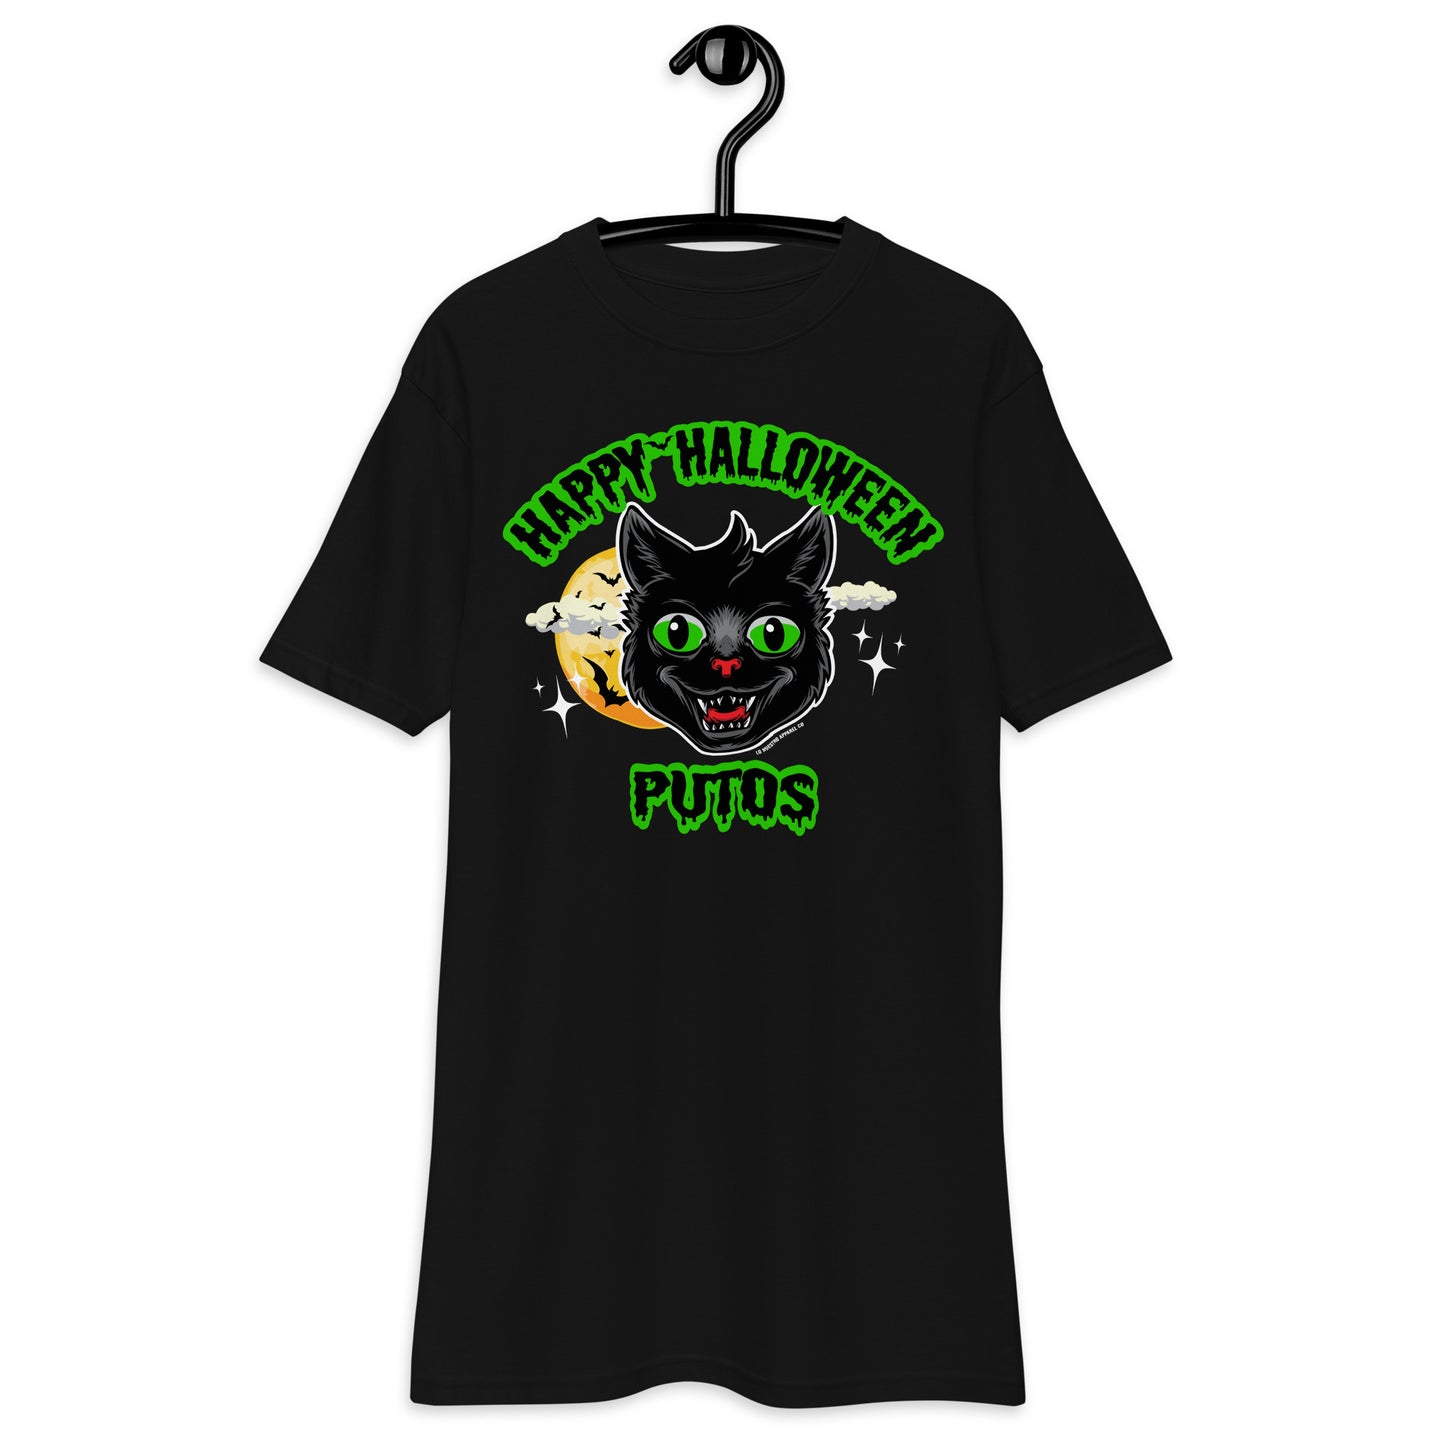 Happy Halloween Putos Men's T-Shirt hanging on a hanger, showcasing black cat graphic – Funny Halloween T-Shirt, Halloween Humor Clothing, Comfortable Halloween T-Shirt.